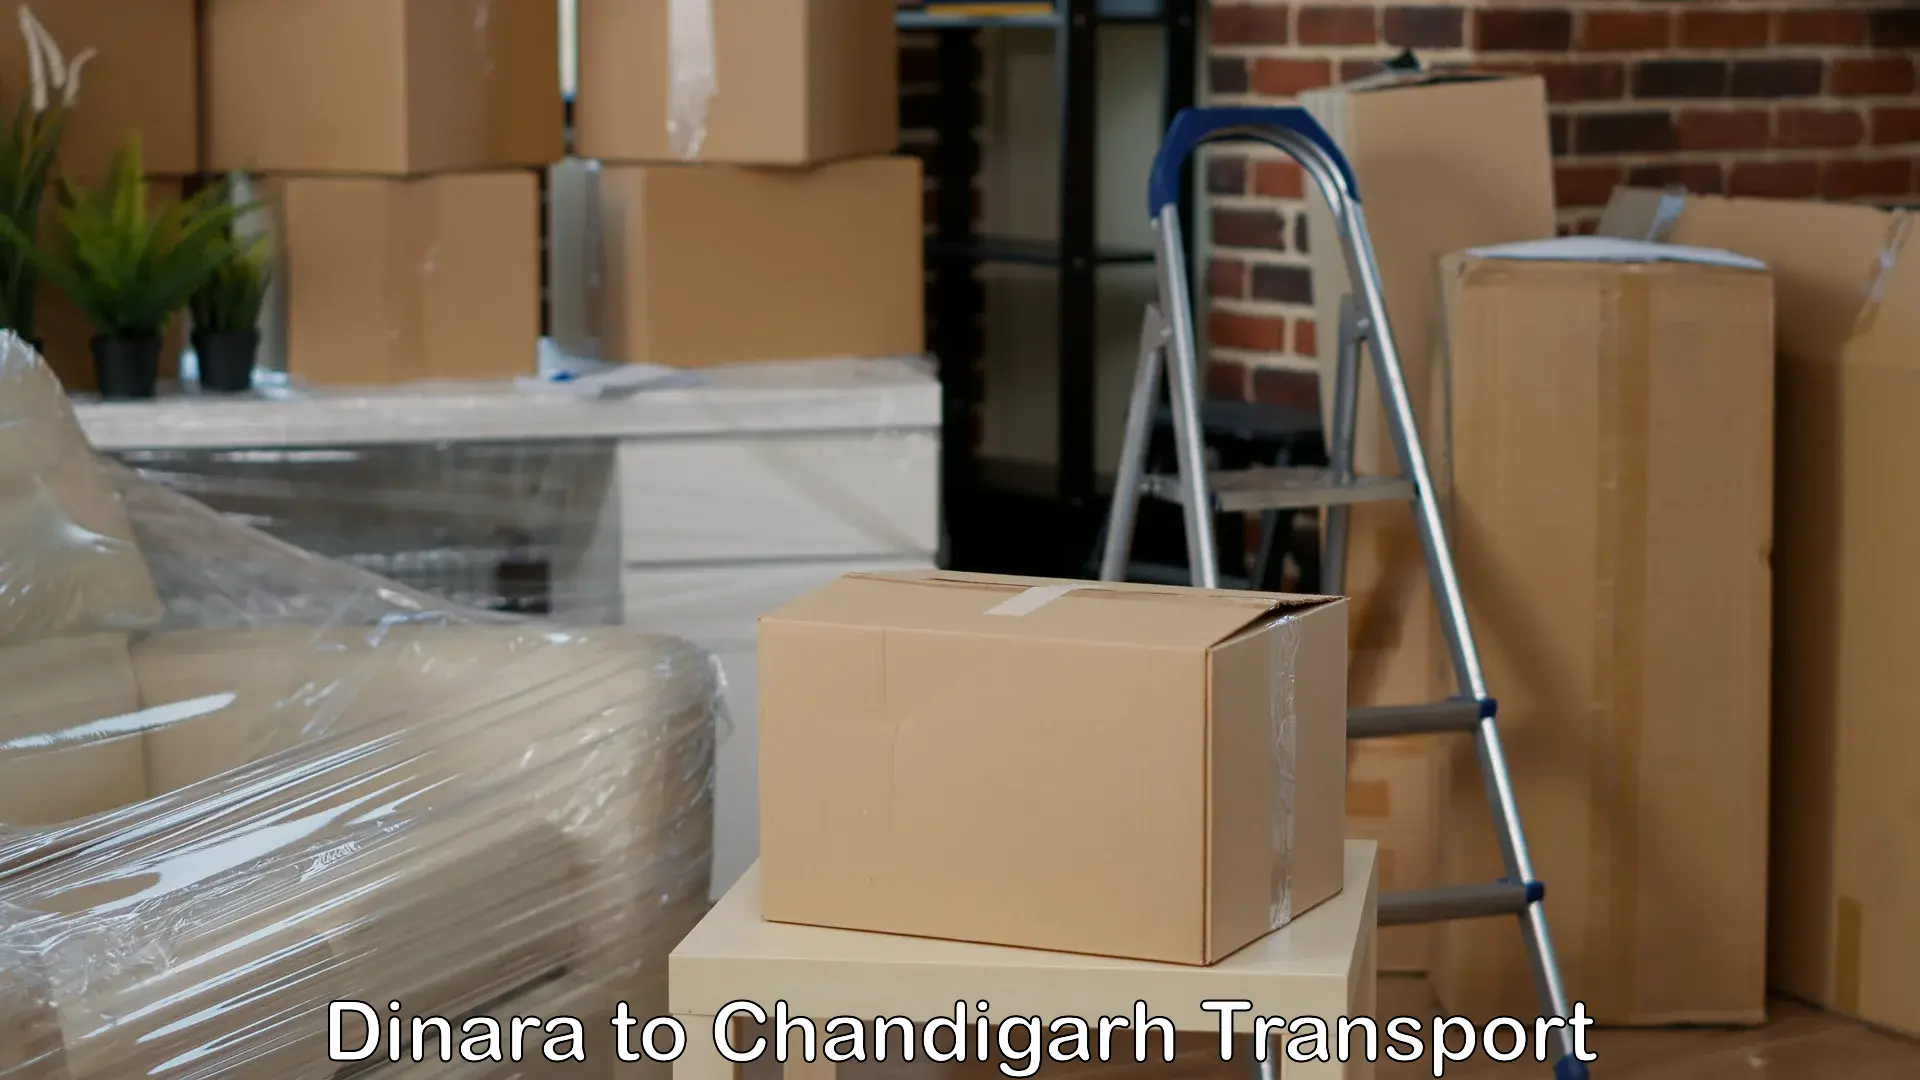 Truck transport companies in India Dinara to Chandigarh